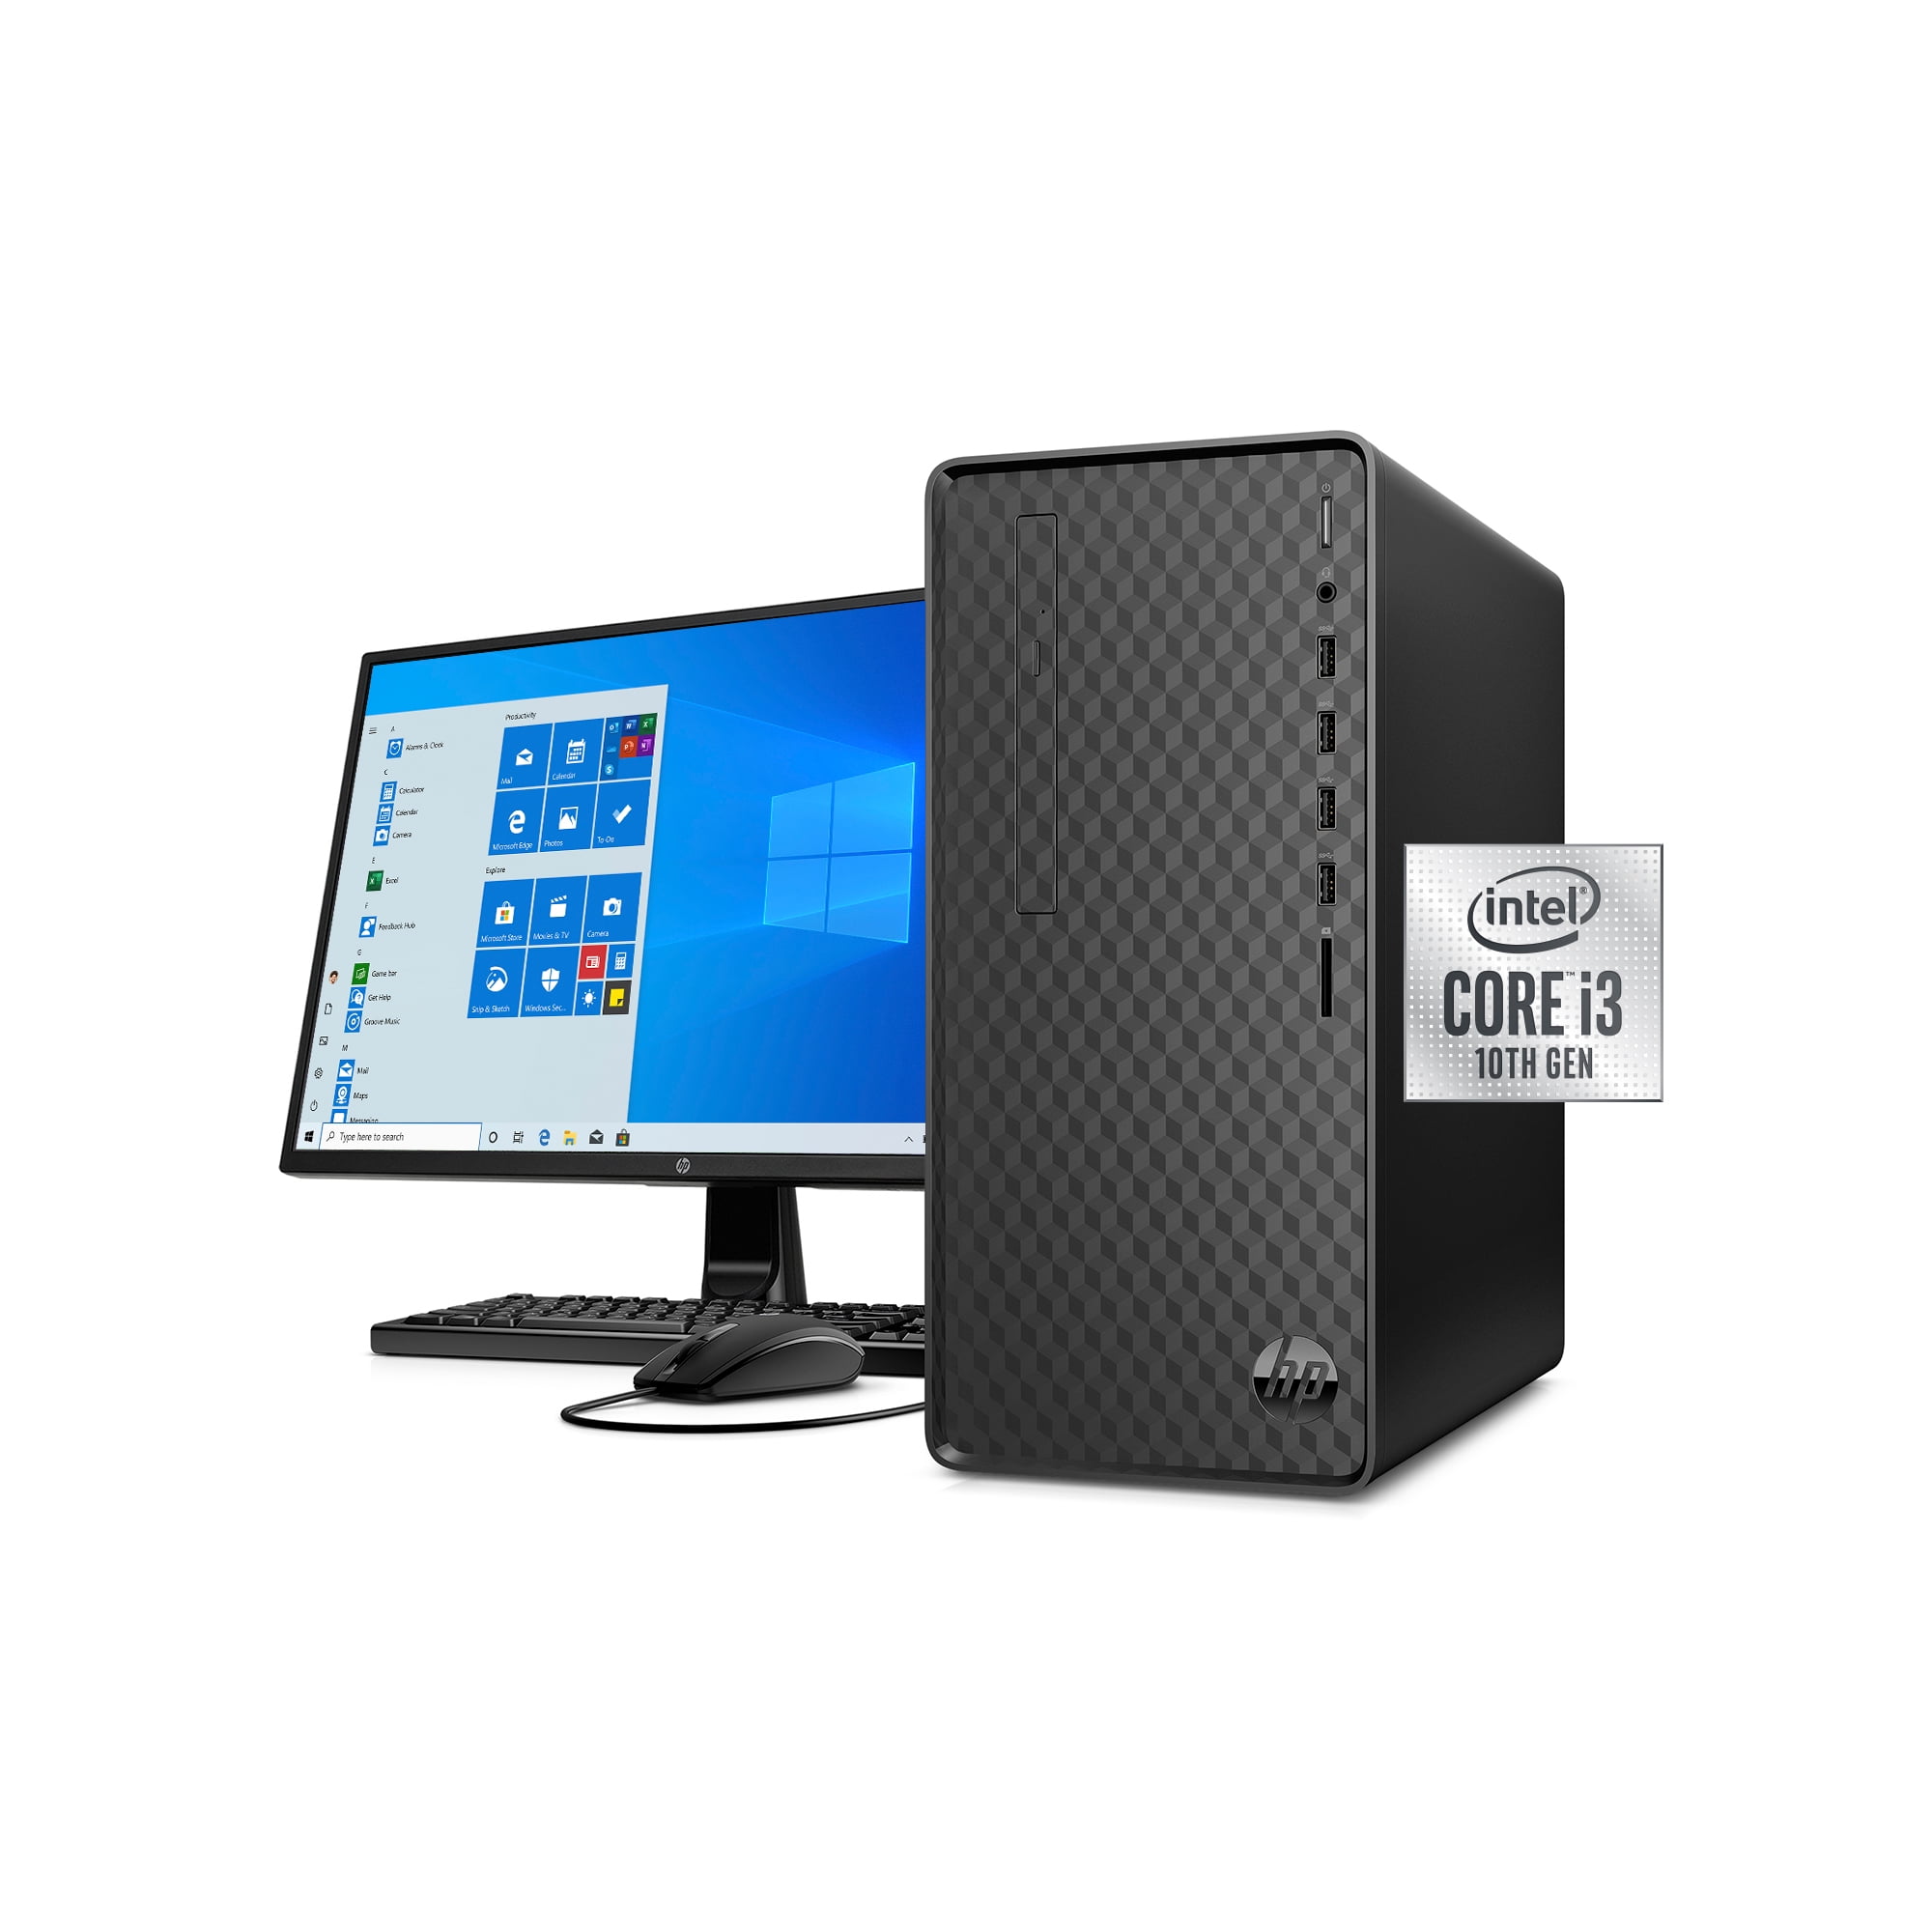 HP Pavilion Desktop, 10th Gen Intel Core i3-10100 Processor, GB 